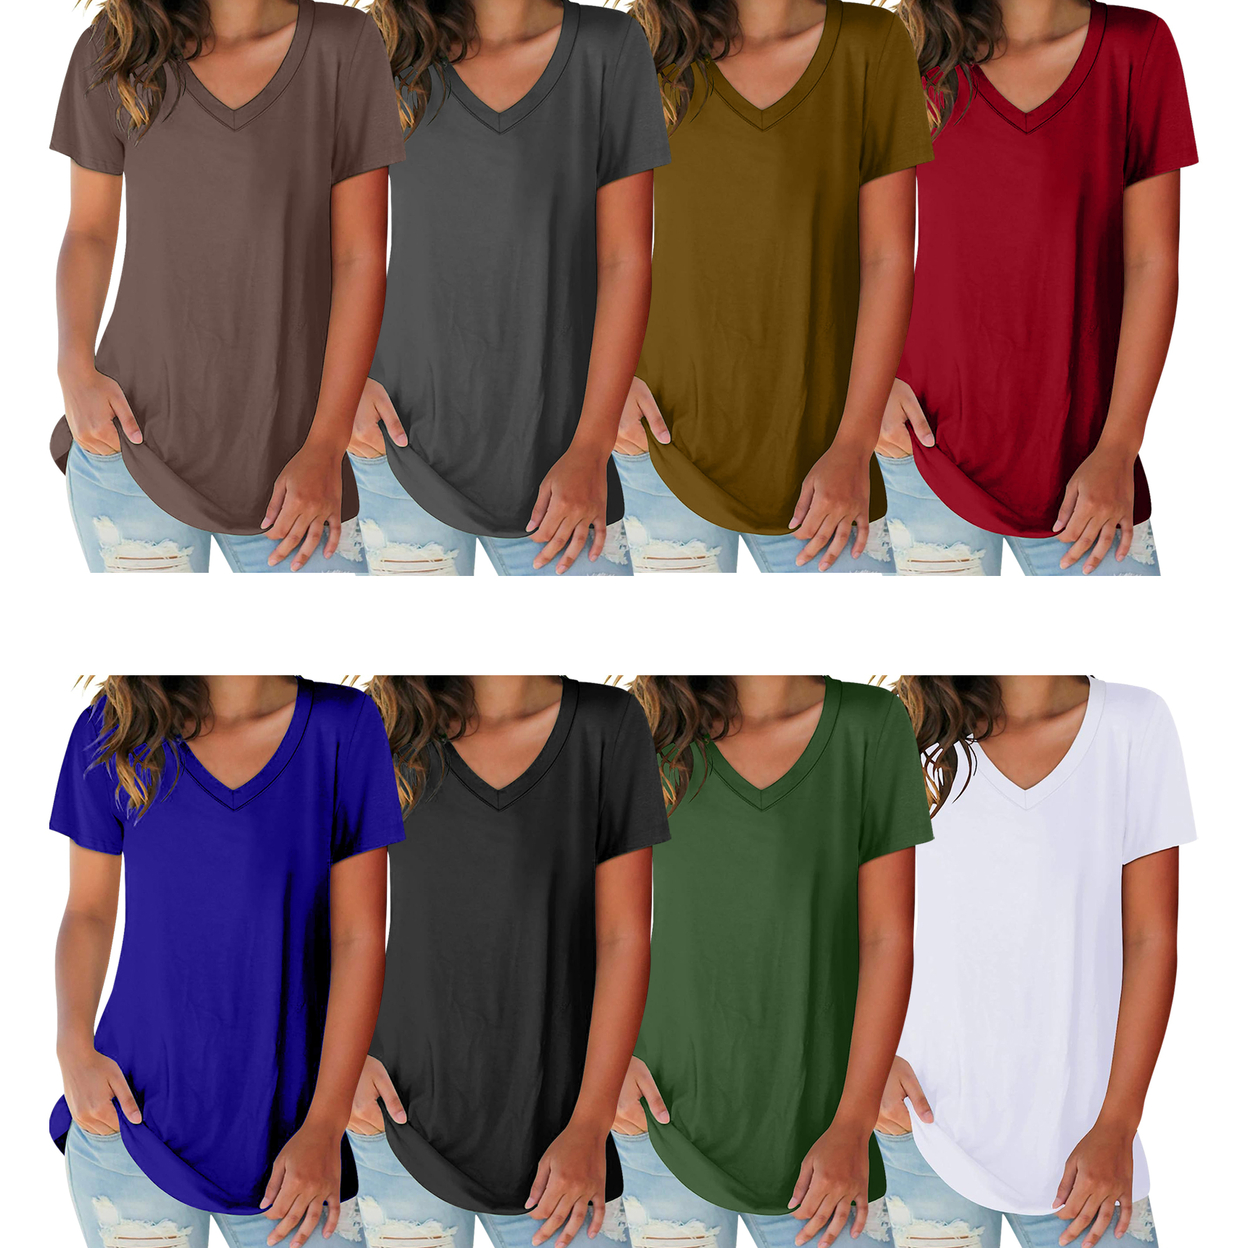 Women's Ultra-Soft Smooth Cotton Blend Basic V-Neck Short Sleeve Shirts - Green, Large